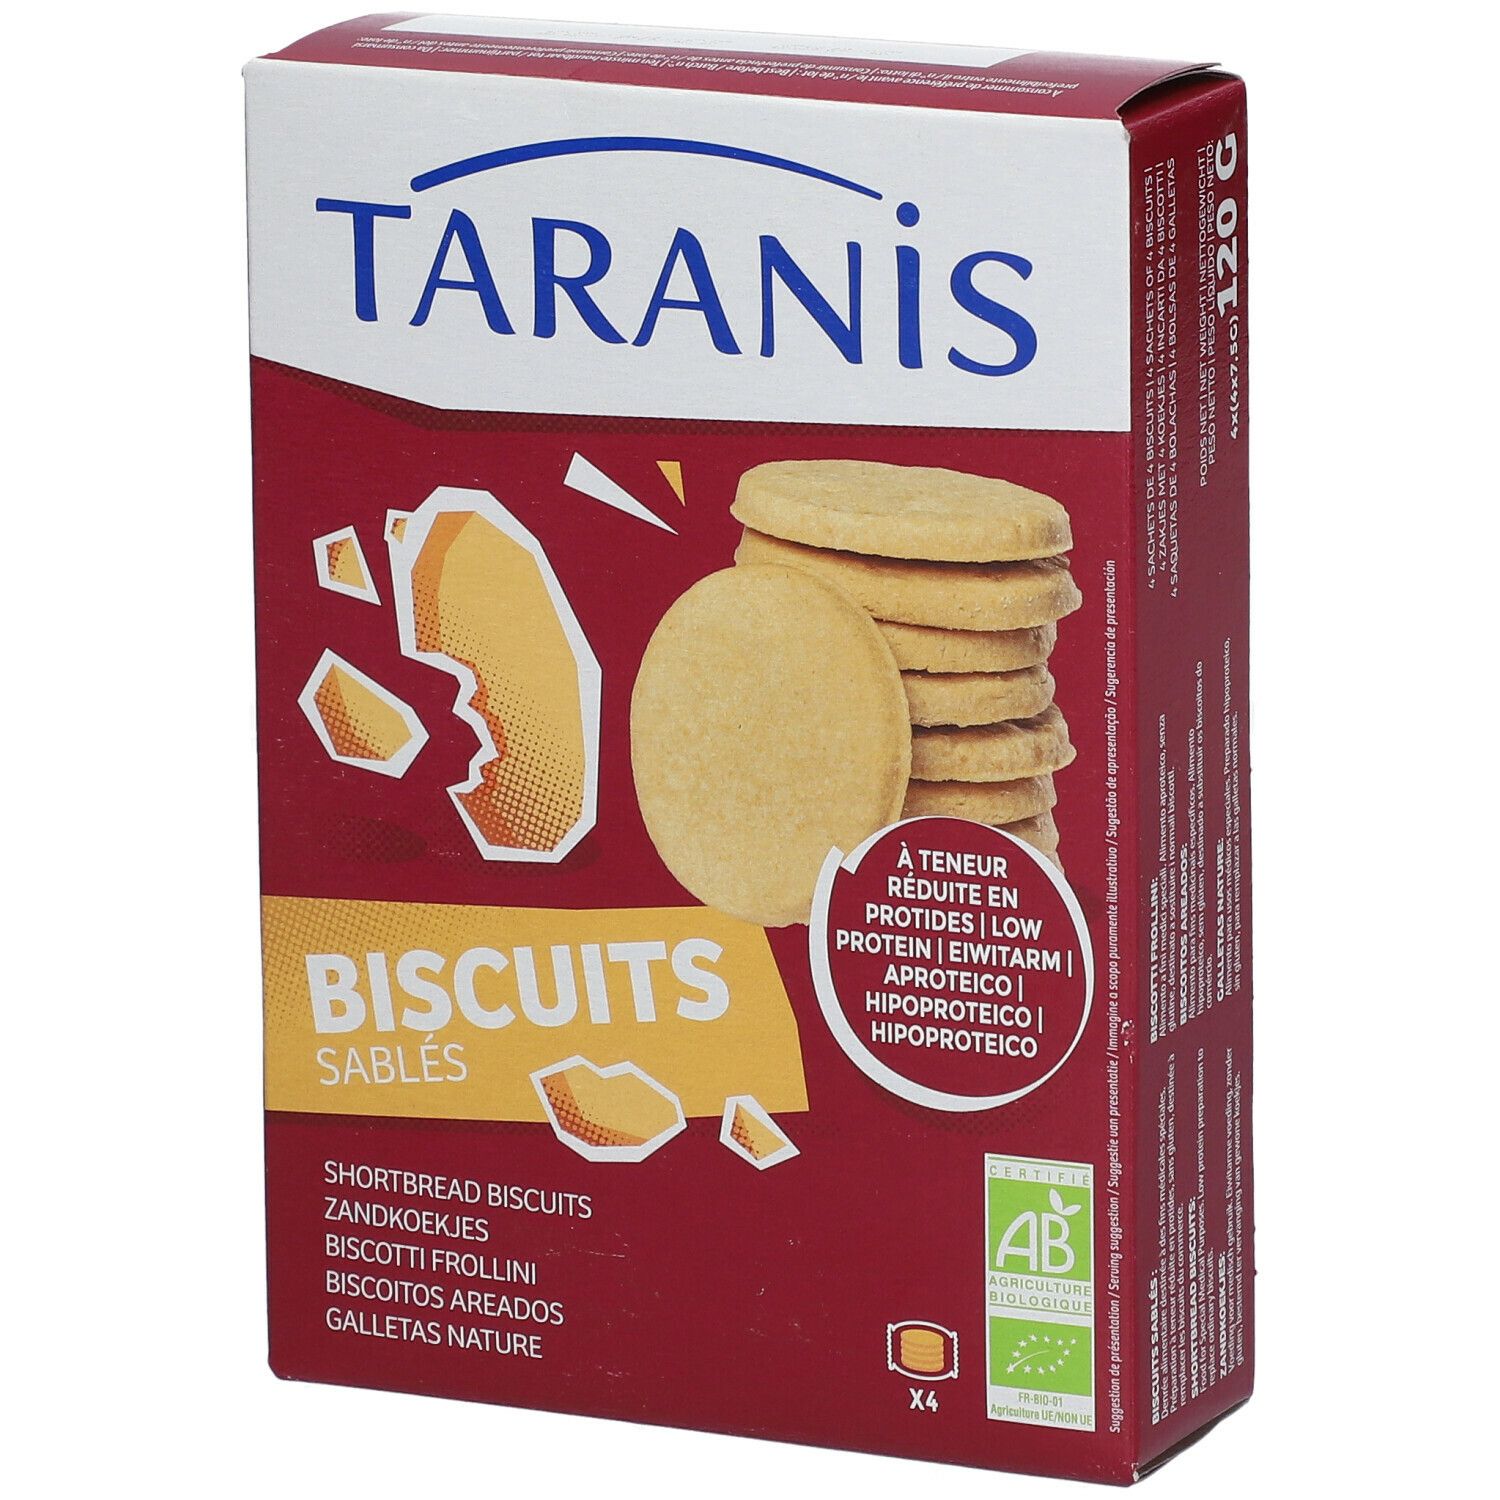 Taranis Biscuits sablés